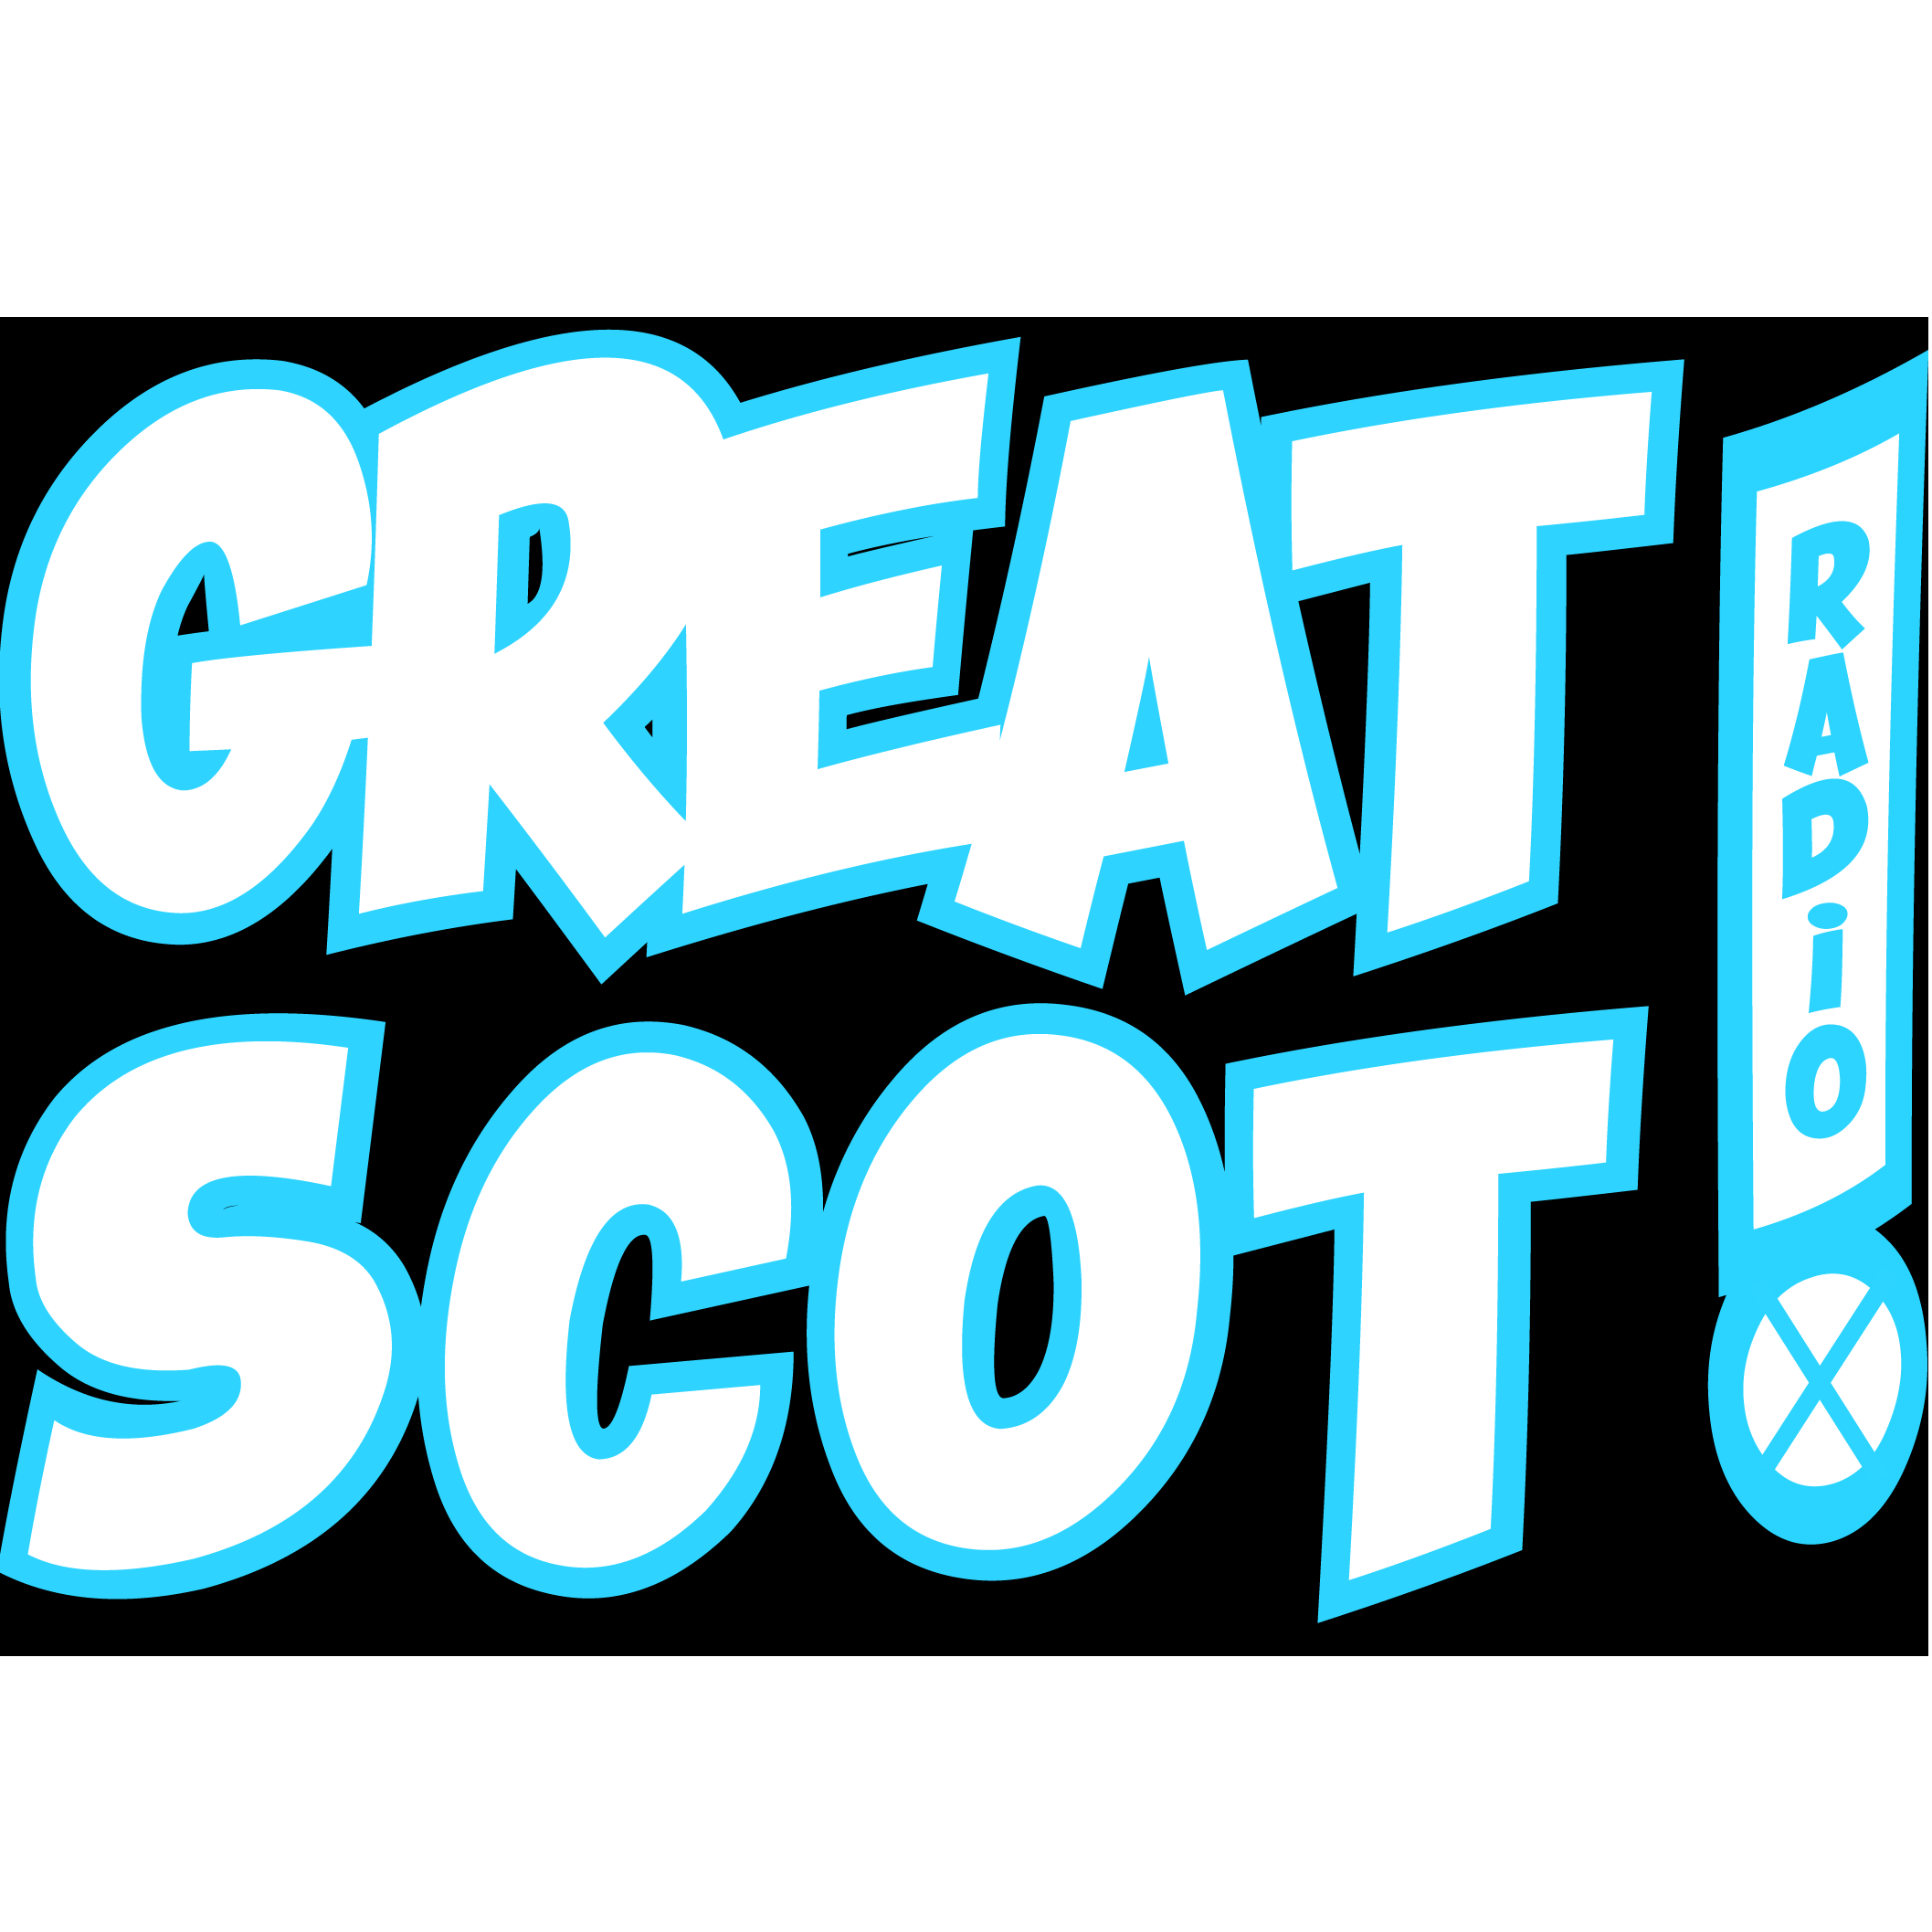 Great Scot! Radio